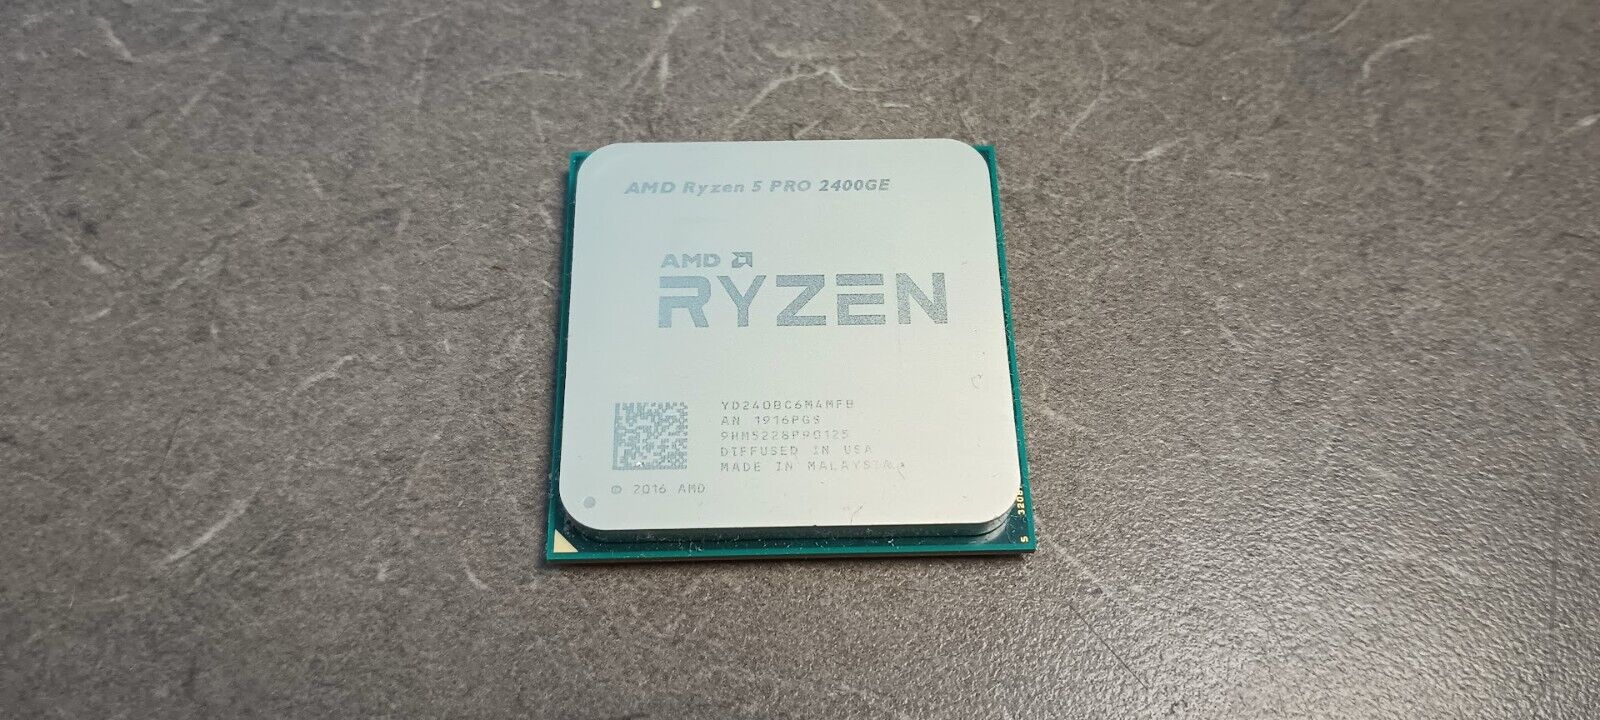 AMD Ryzen 5 Pro 2400GE Quad-Core 3.2 GHz Socket AM4 35W Processor #95